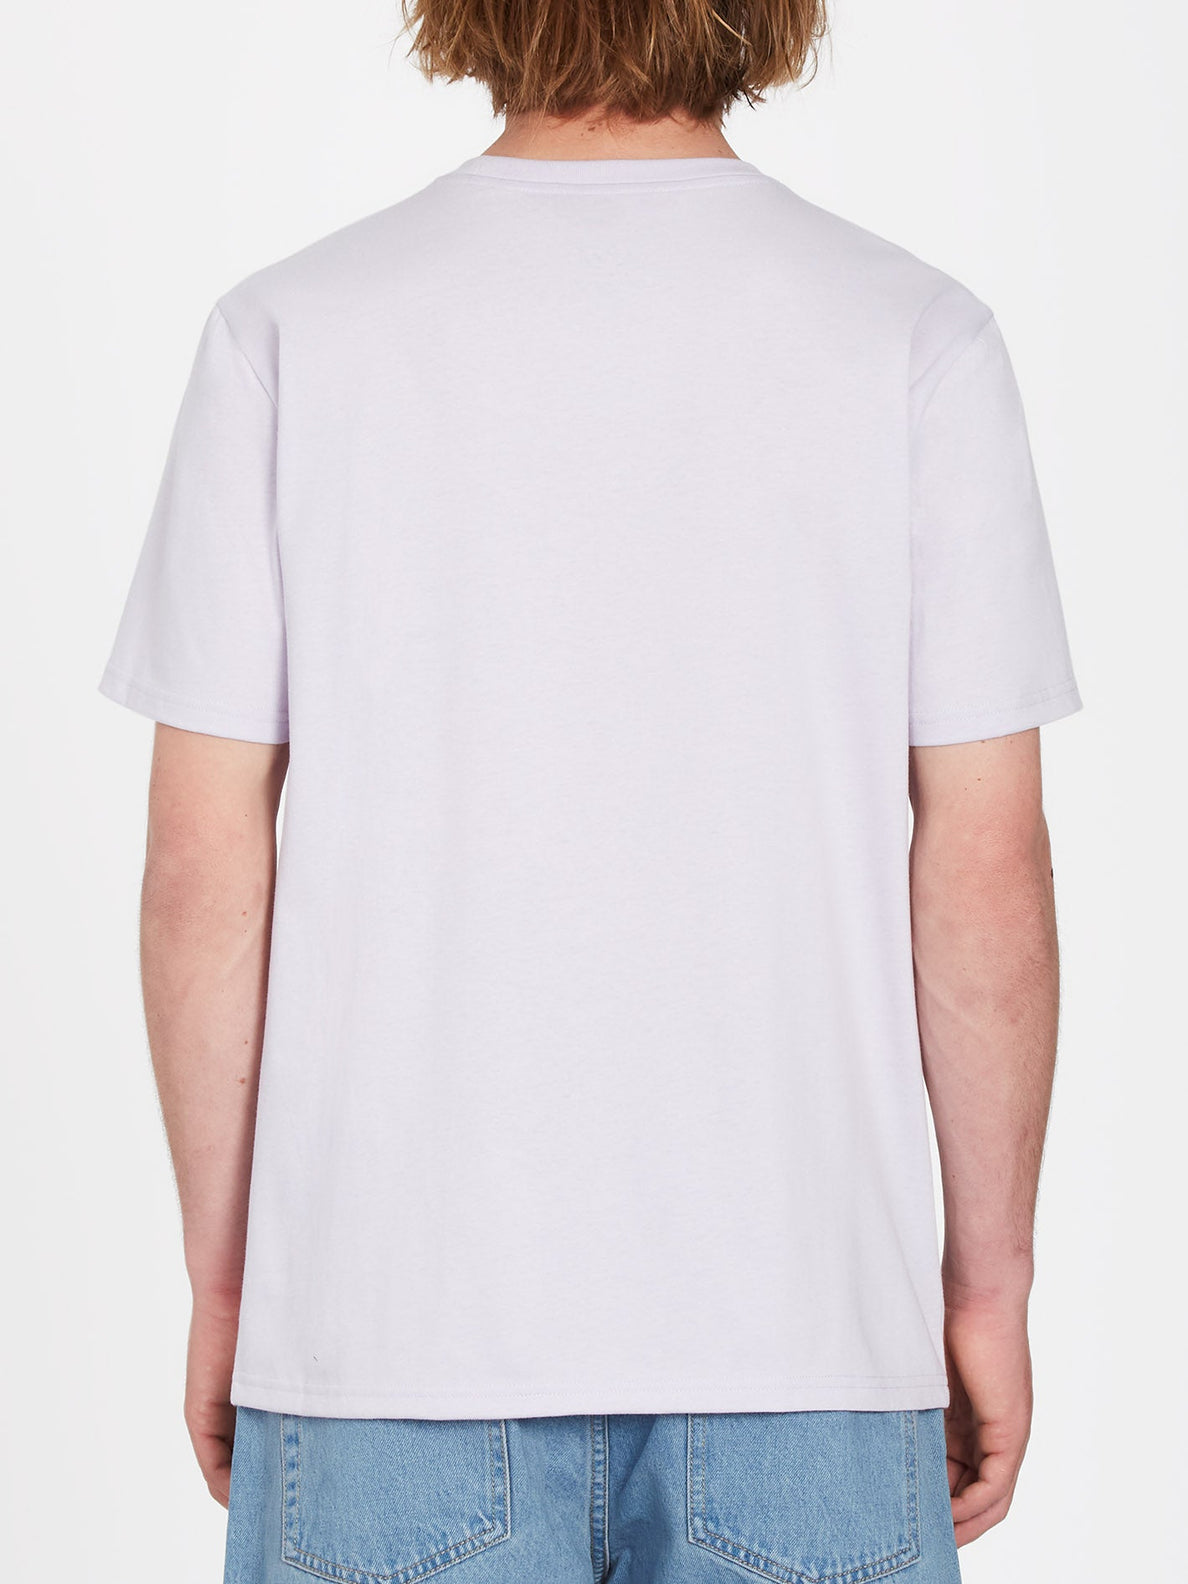 Camiseta Volcom Circle Blanks - Light Orchid | Camisetas de hombre | Camisetas manga corta de hombre | Volcom Shop | surfdevils.com